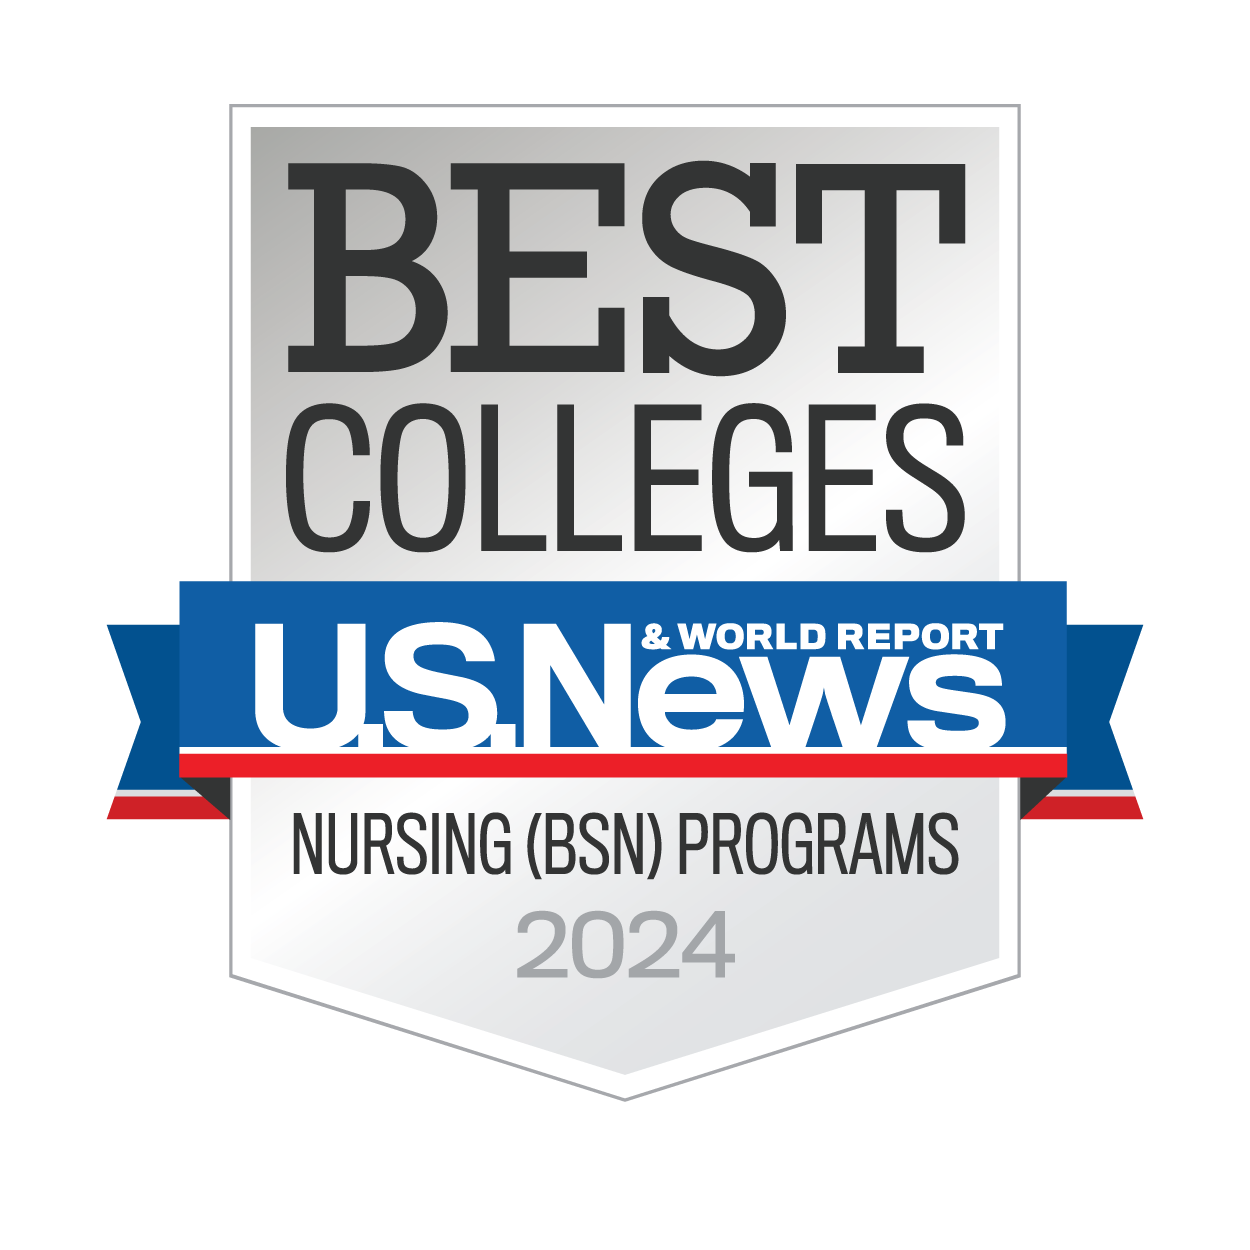 nursing programs 2024 badge